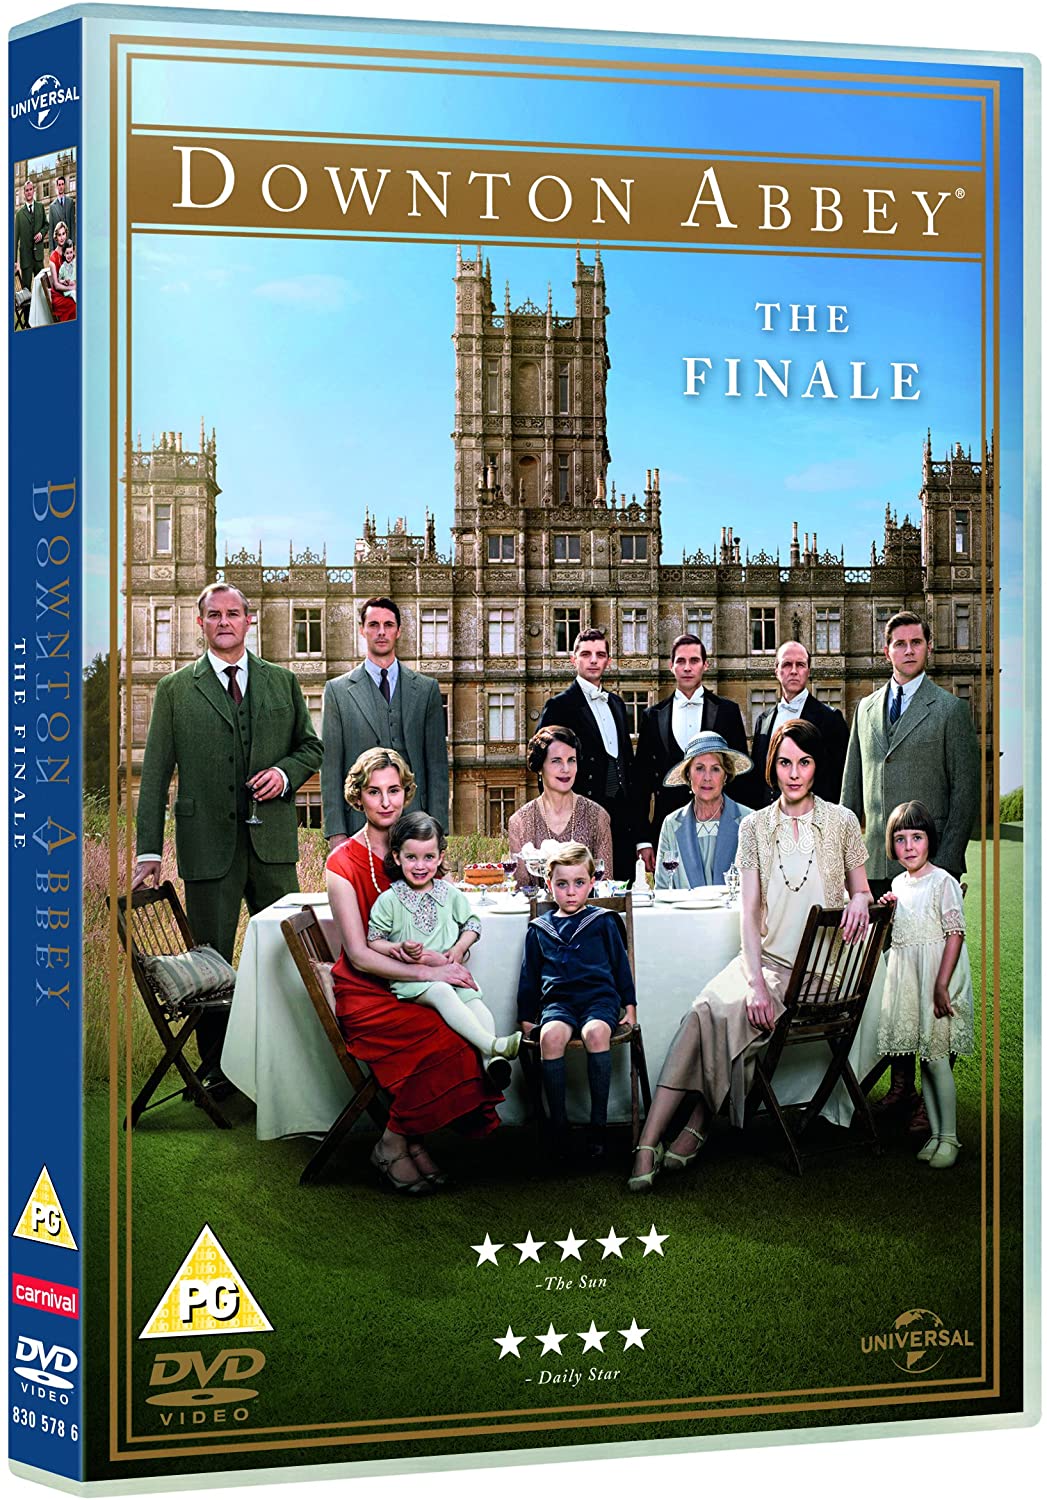 Downton Abbey: The Finale